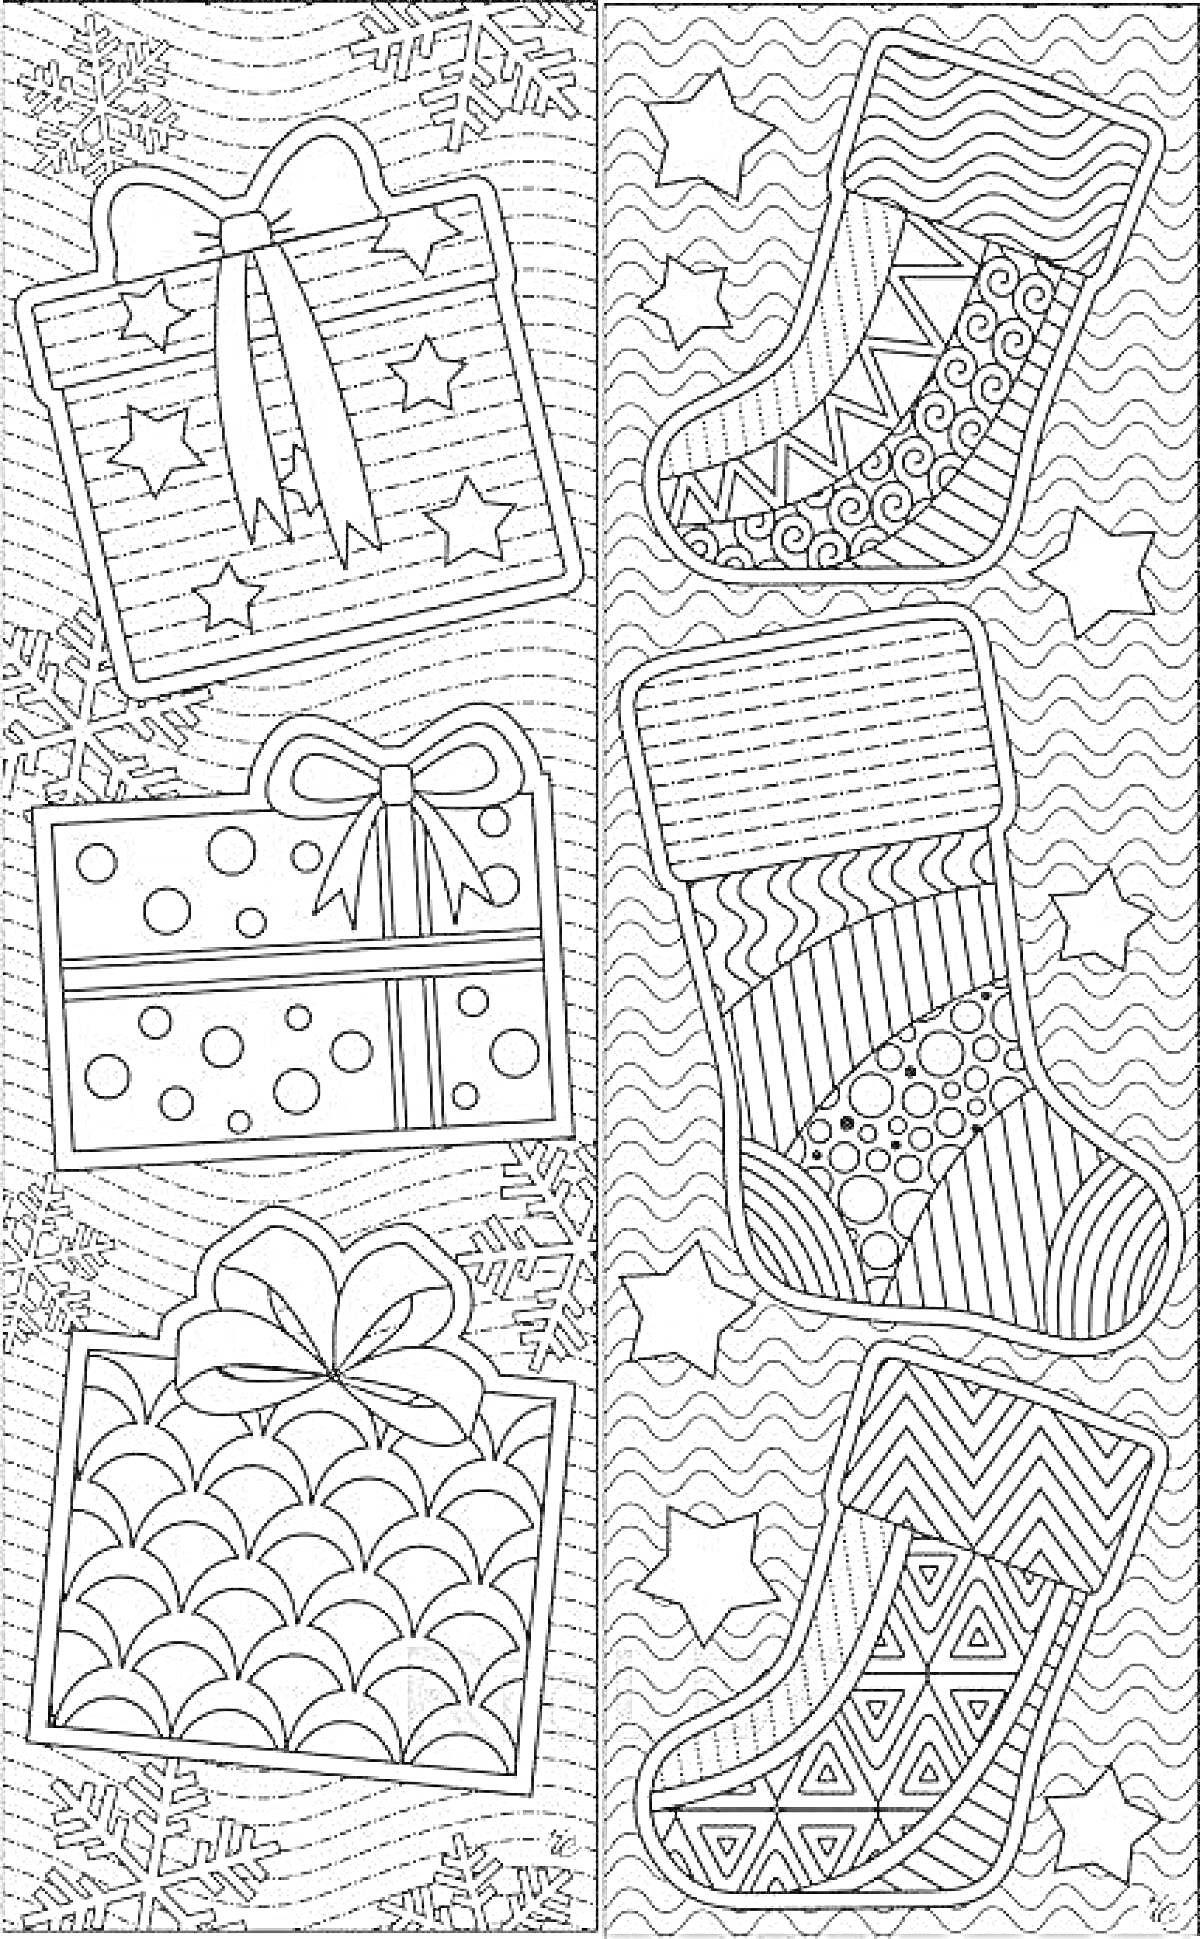 РаскраскаНовогодние закладки: подарки с бантиками, сапожки, снежинки, звезды